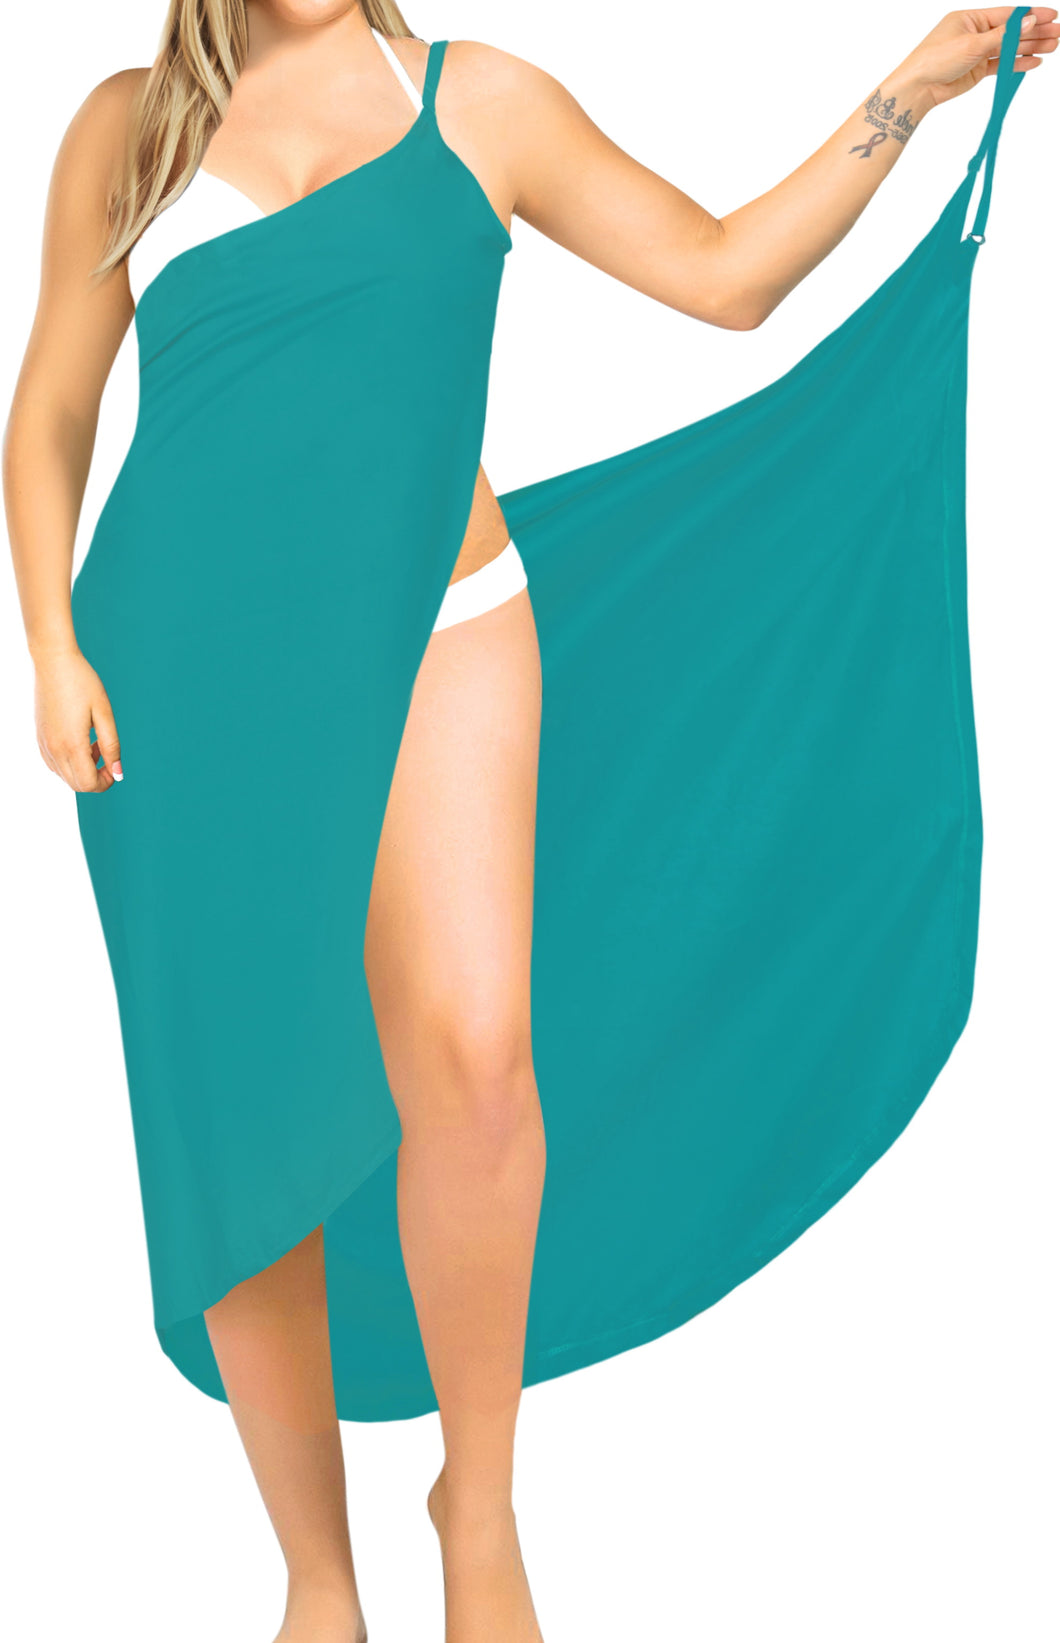 la-leela-rayon-bathing-towel-Women's-Sarong-Swimsuit-Cover-Up-Summer-Beach-Wrap-Skirt-Full-Long-Turquoise Green_A287